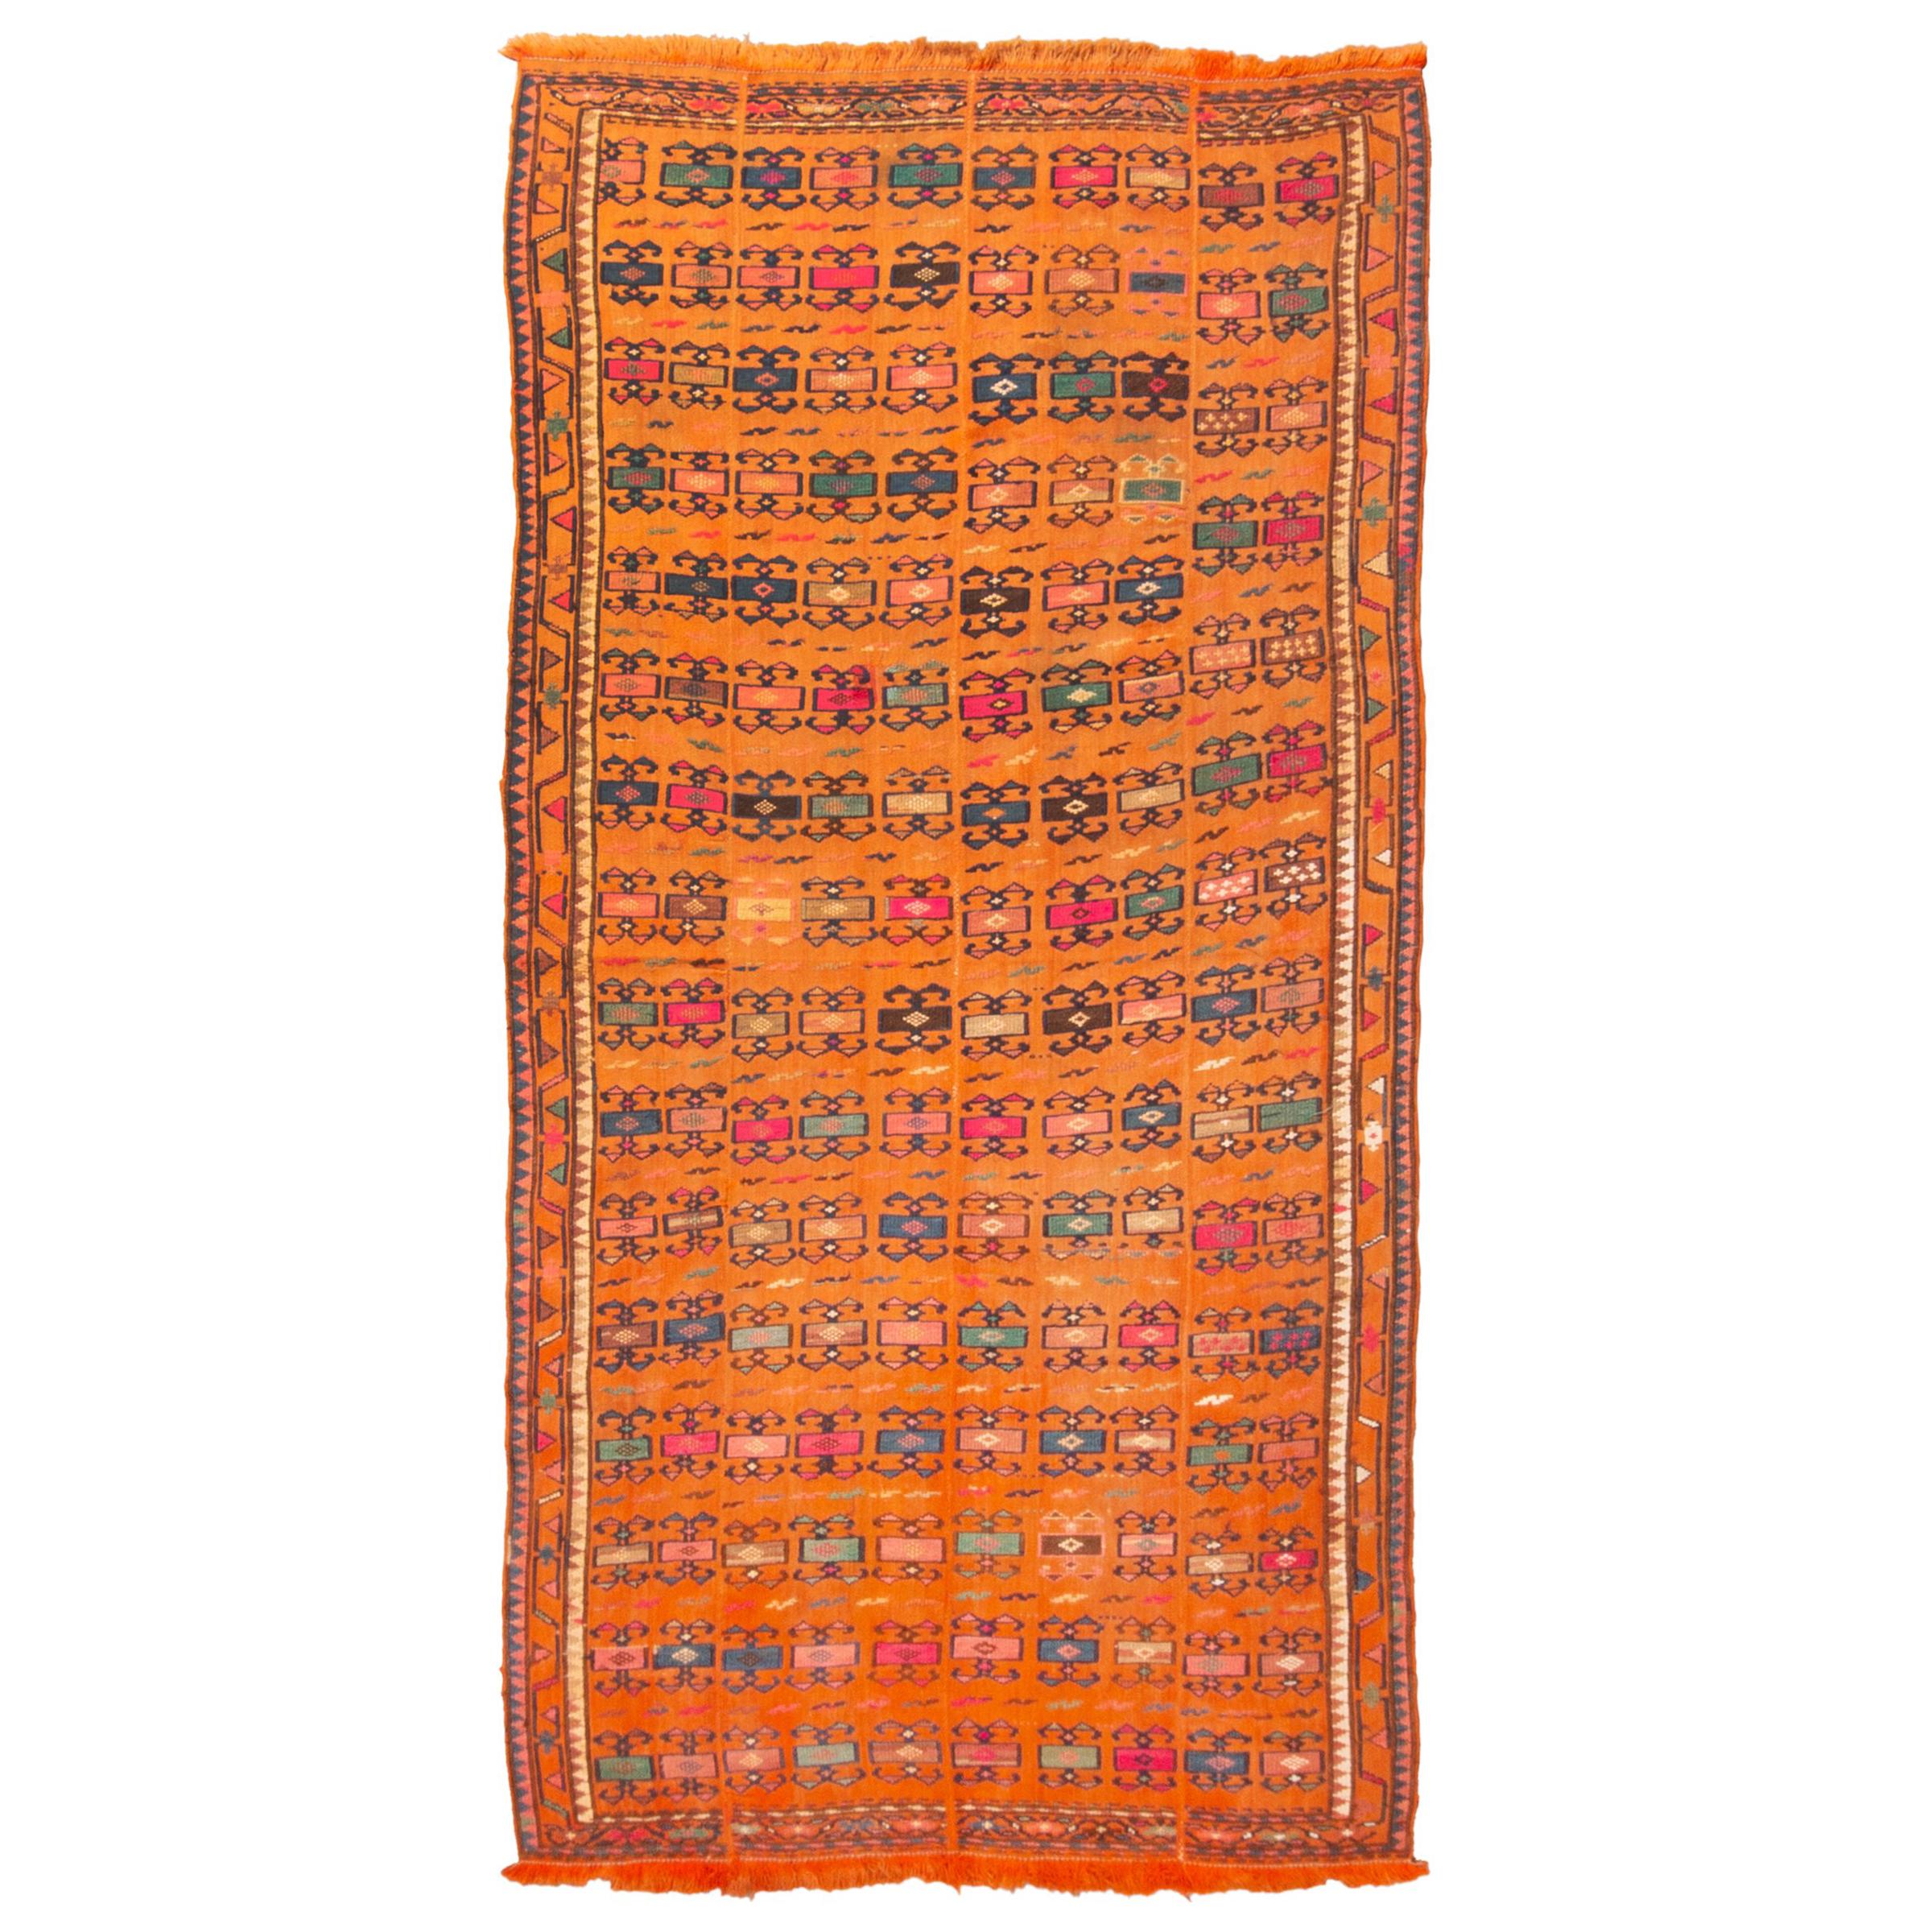 Antique Verneh Orange Persian Wool Kilim Rug